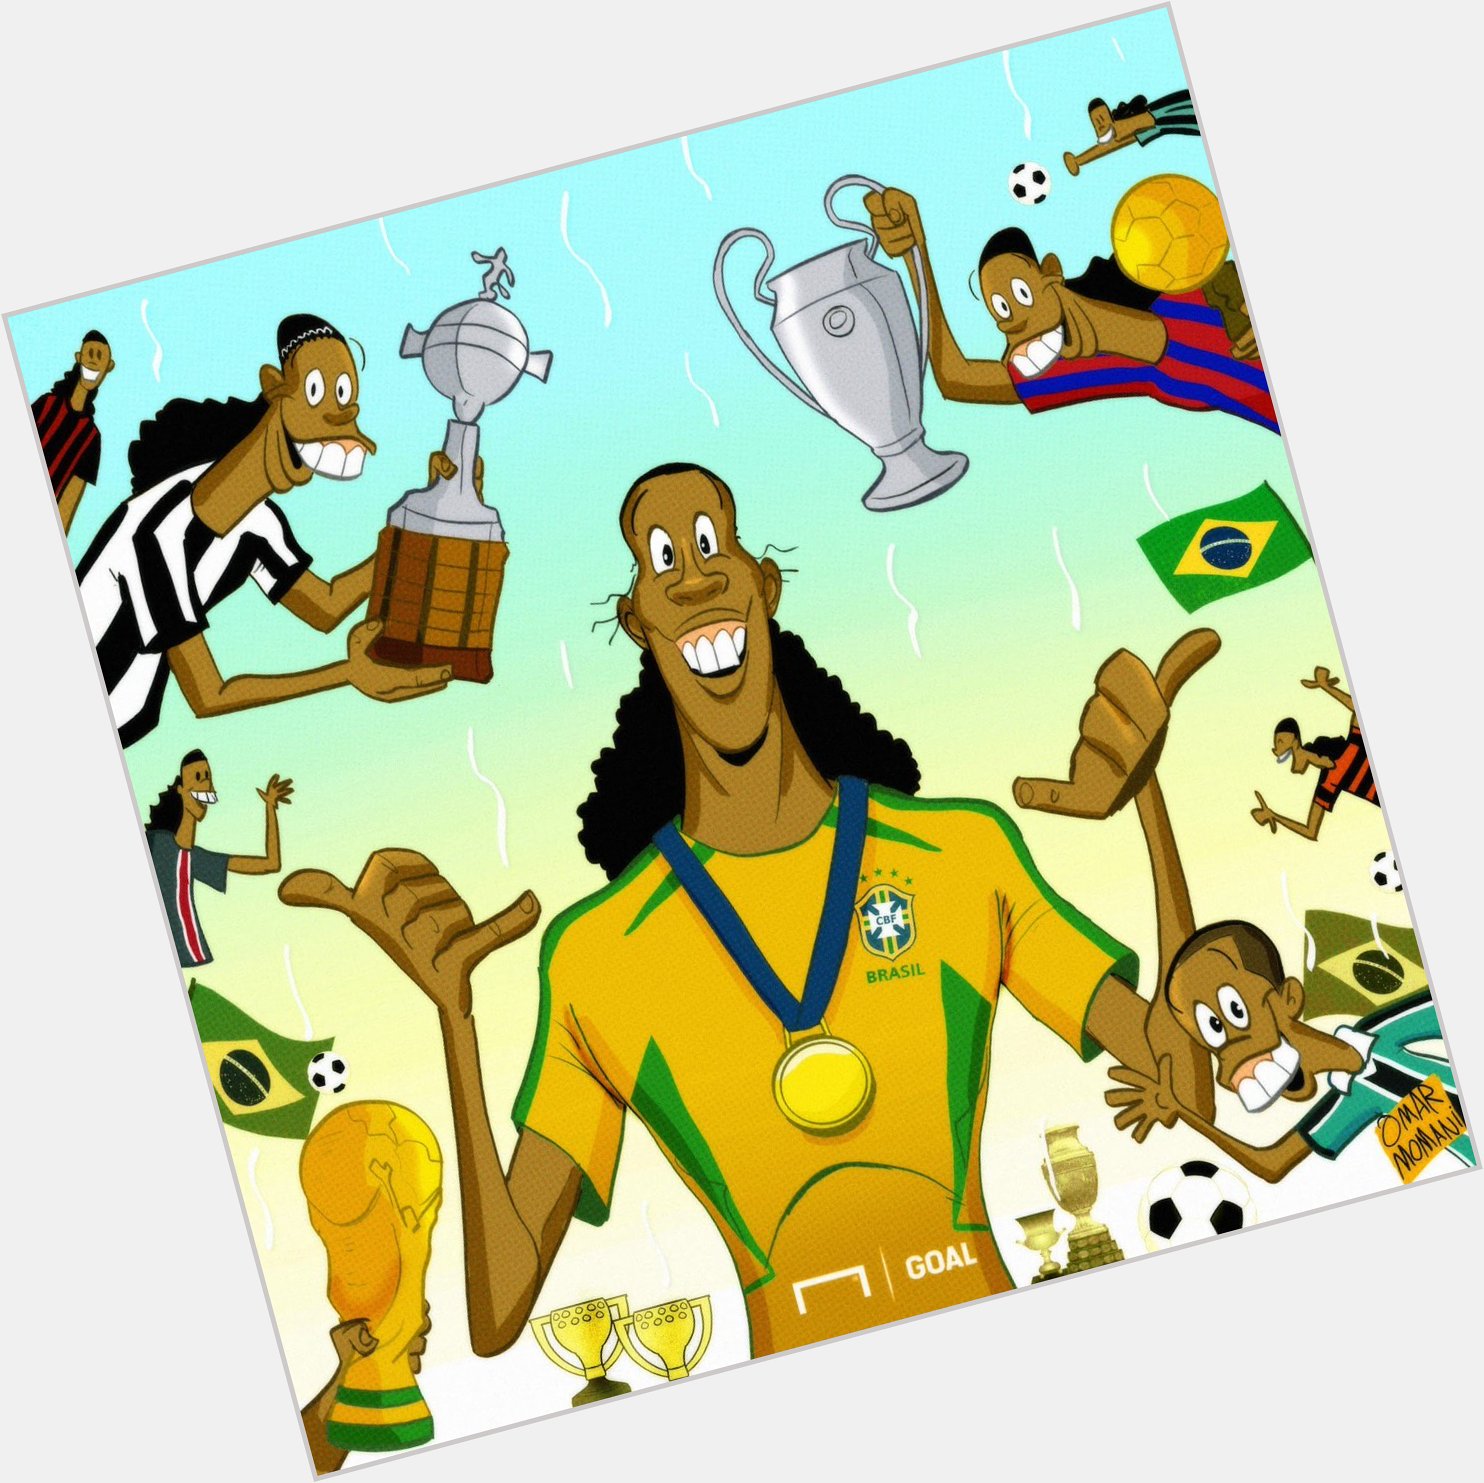 Happy birthday to these legends, Ronaldinho Gaúcho, Ronald Koeman and Lothar Matthäus 